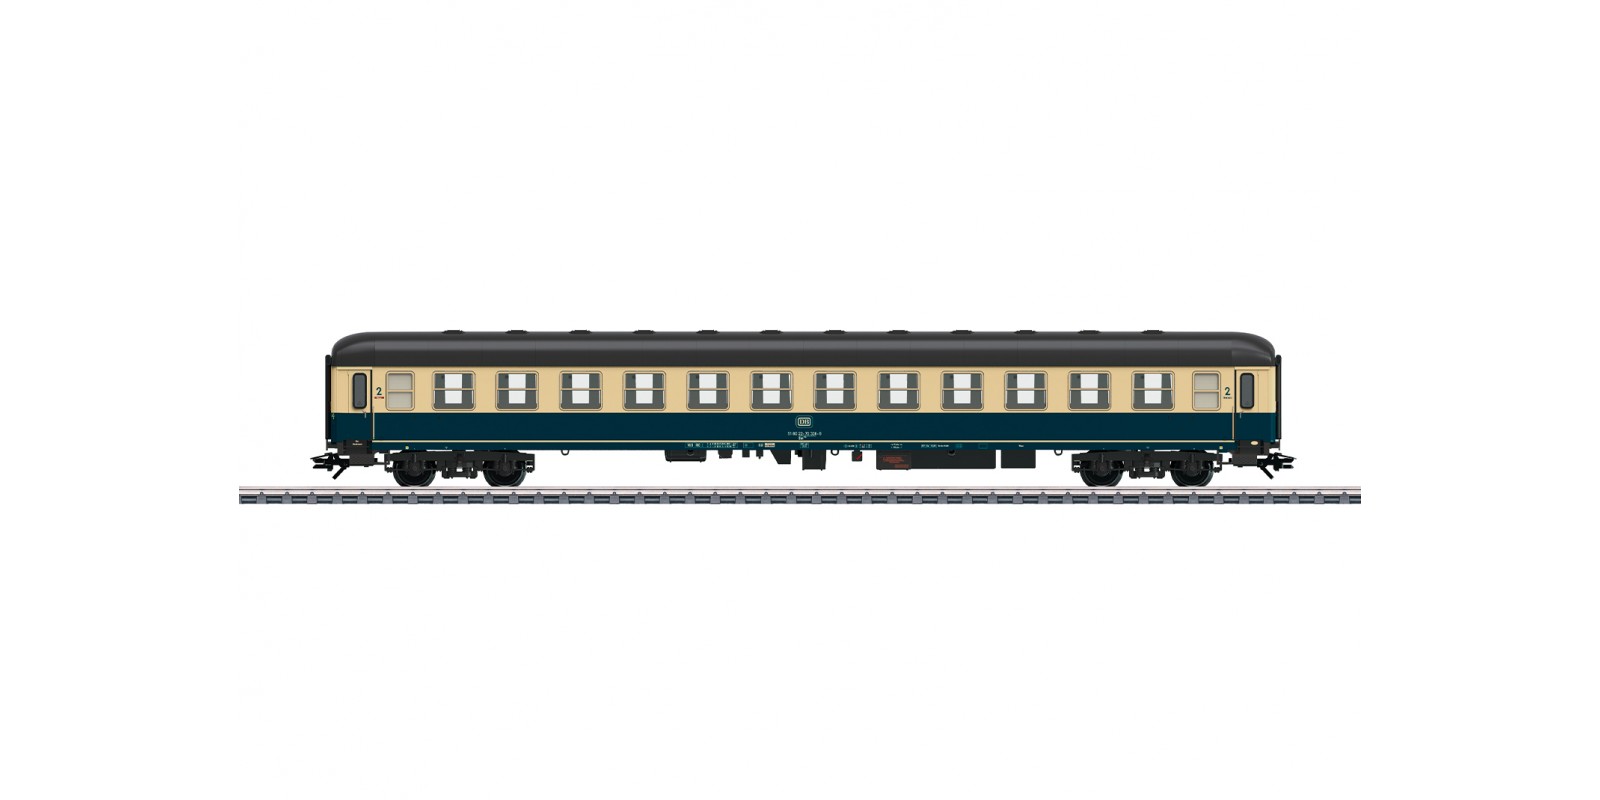 43925 Type Bm 234 Express Passenger Car